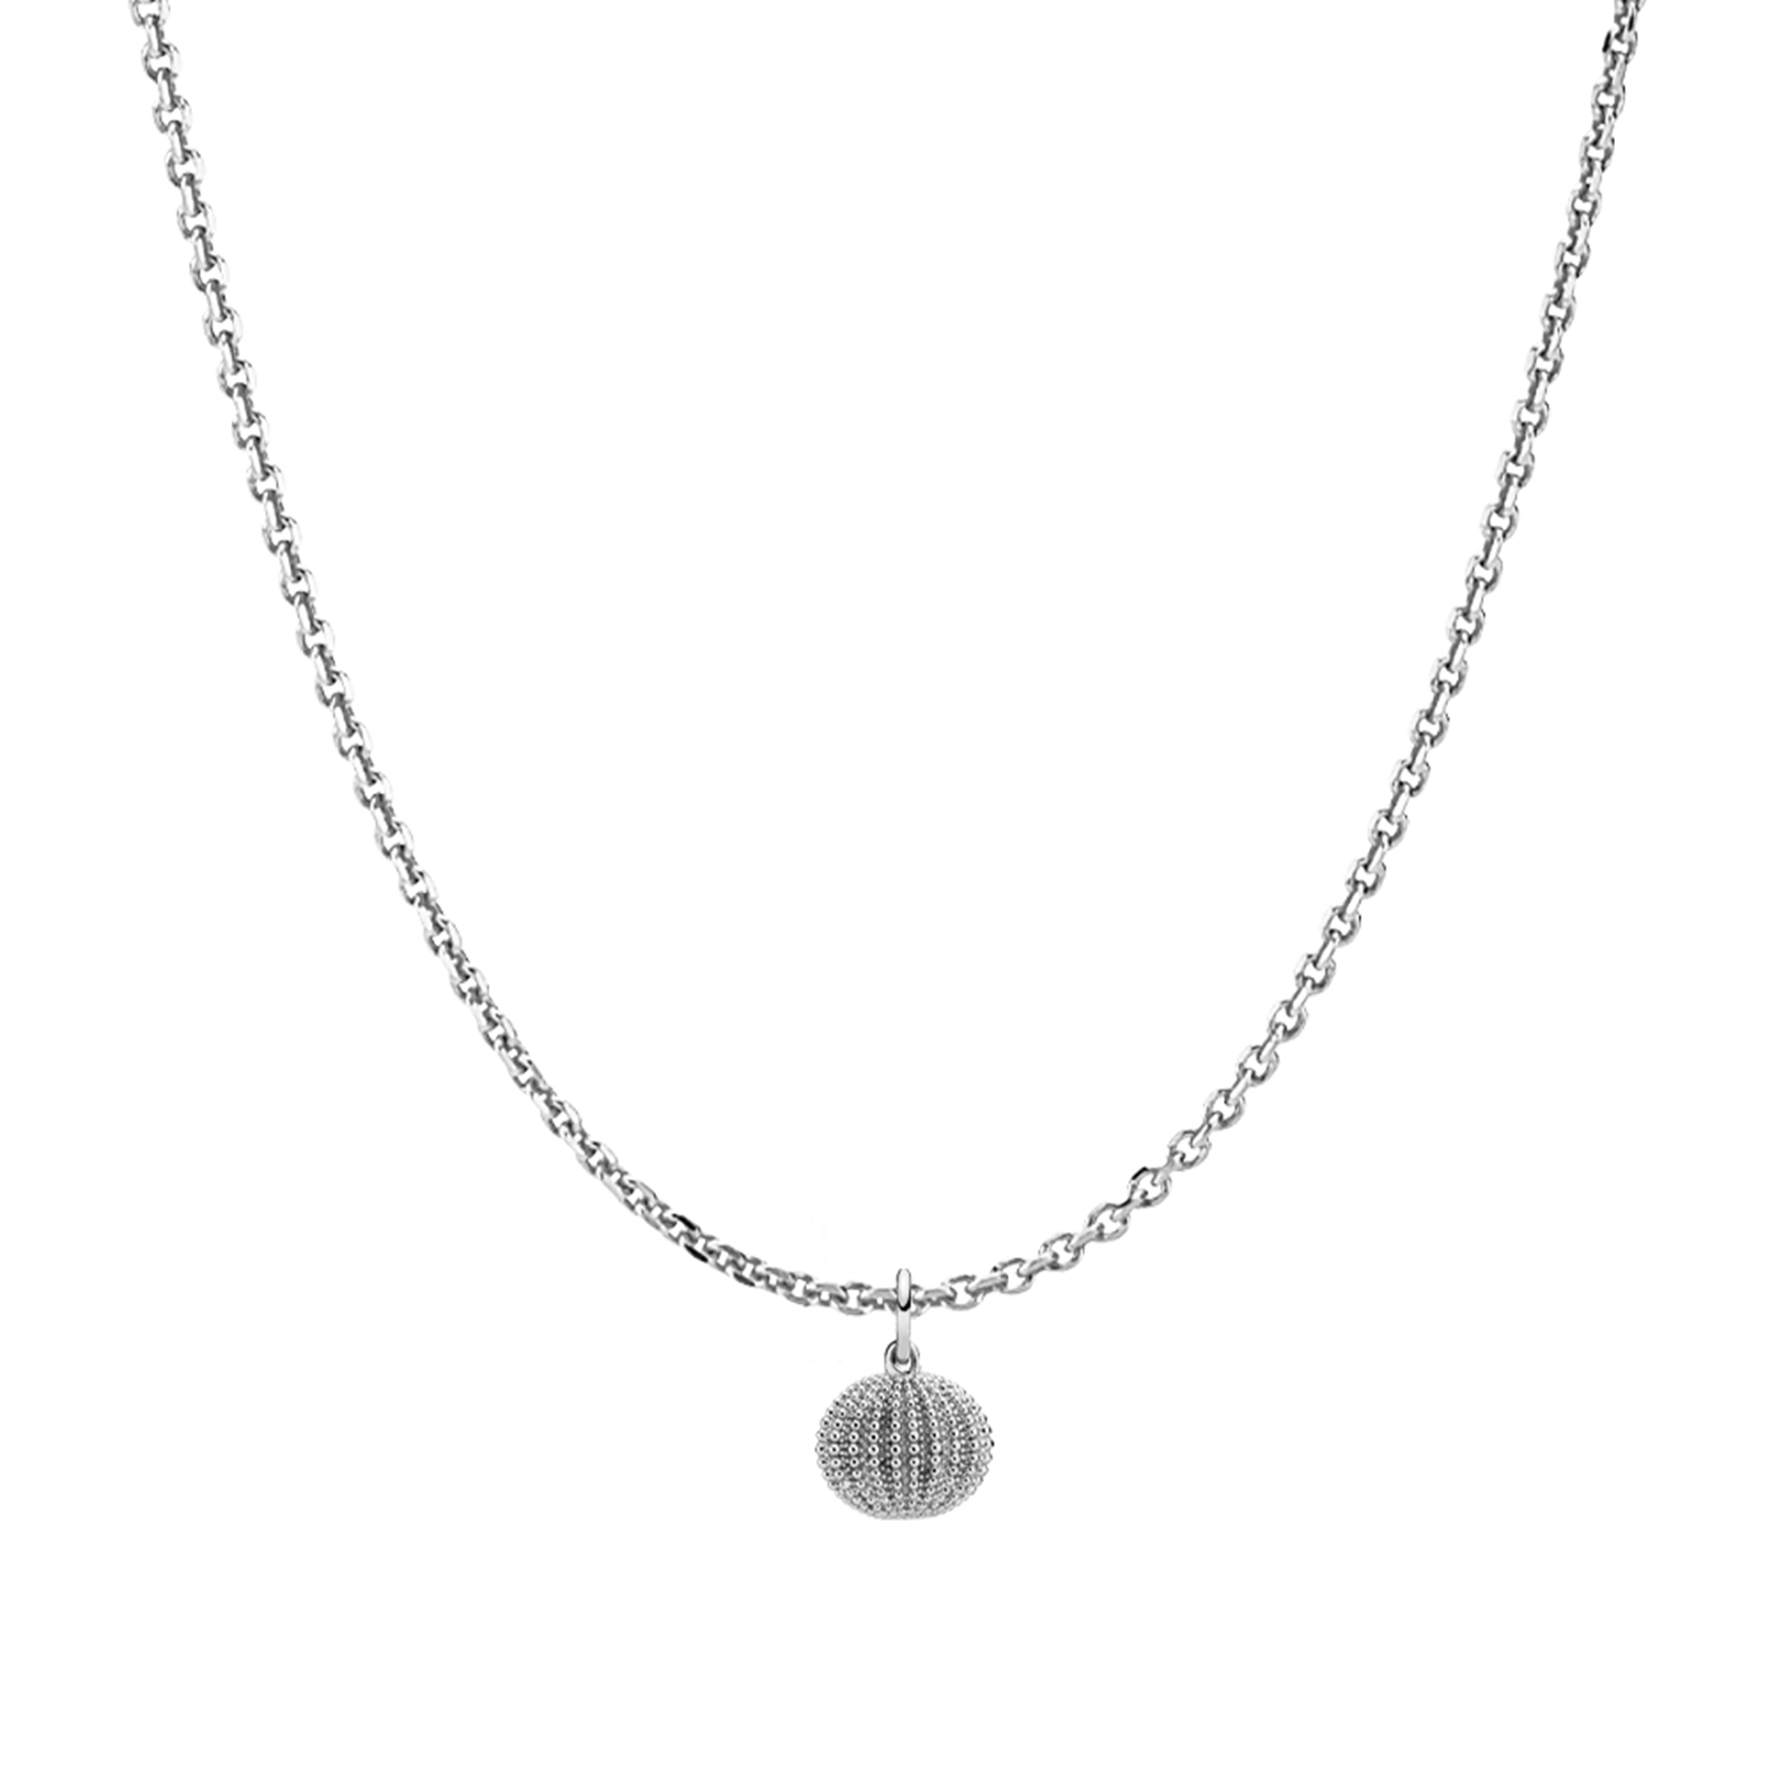 Seashell Necklace von Izabel Camille in Silber Sterling 925